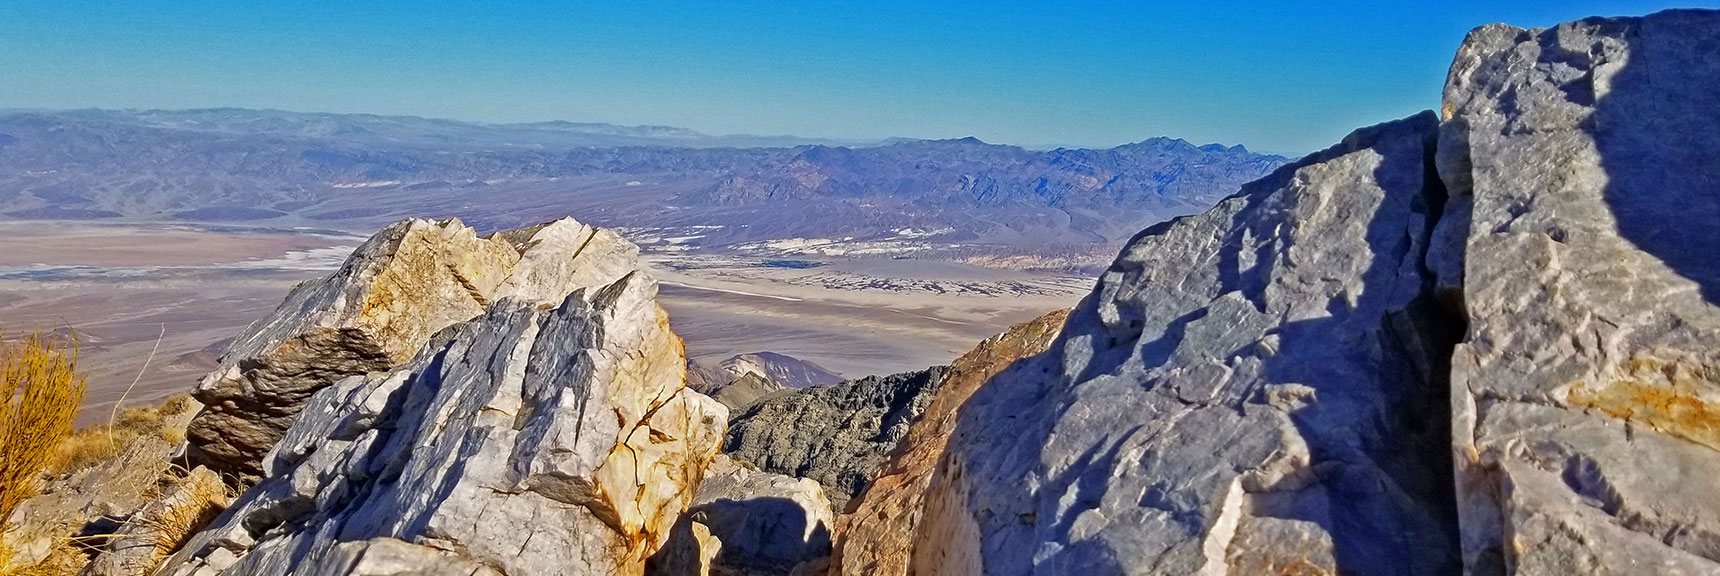 Jagged Rock Northeastern View Atop Aguereberry Point | Aguereberry Point | Panamint Mountain Range | Death Valley National Park, California